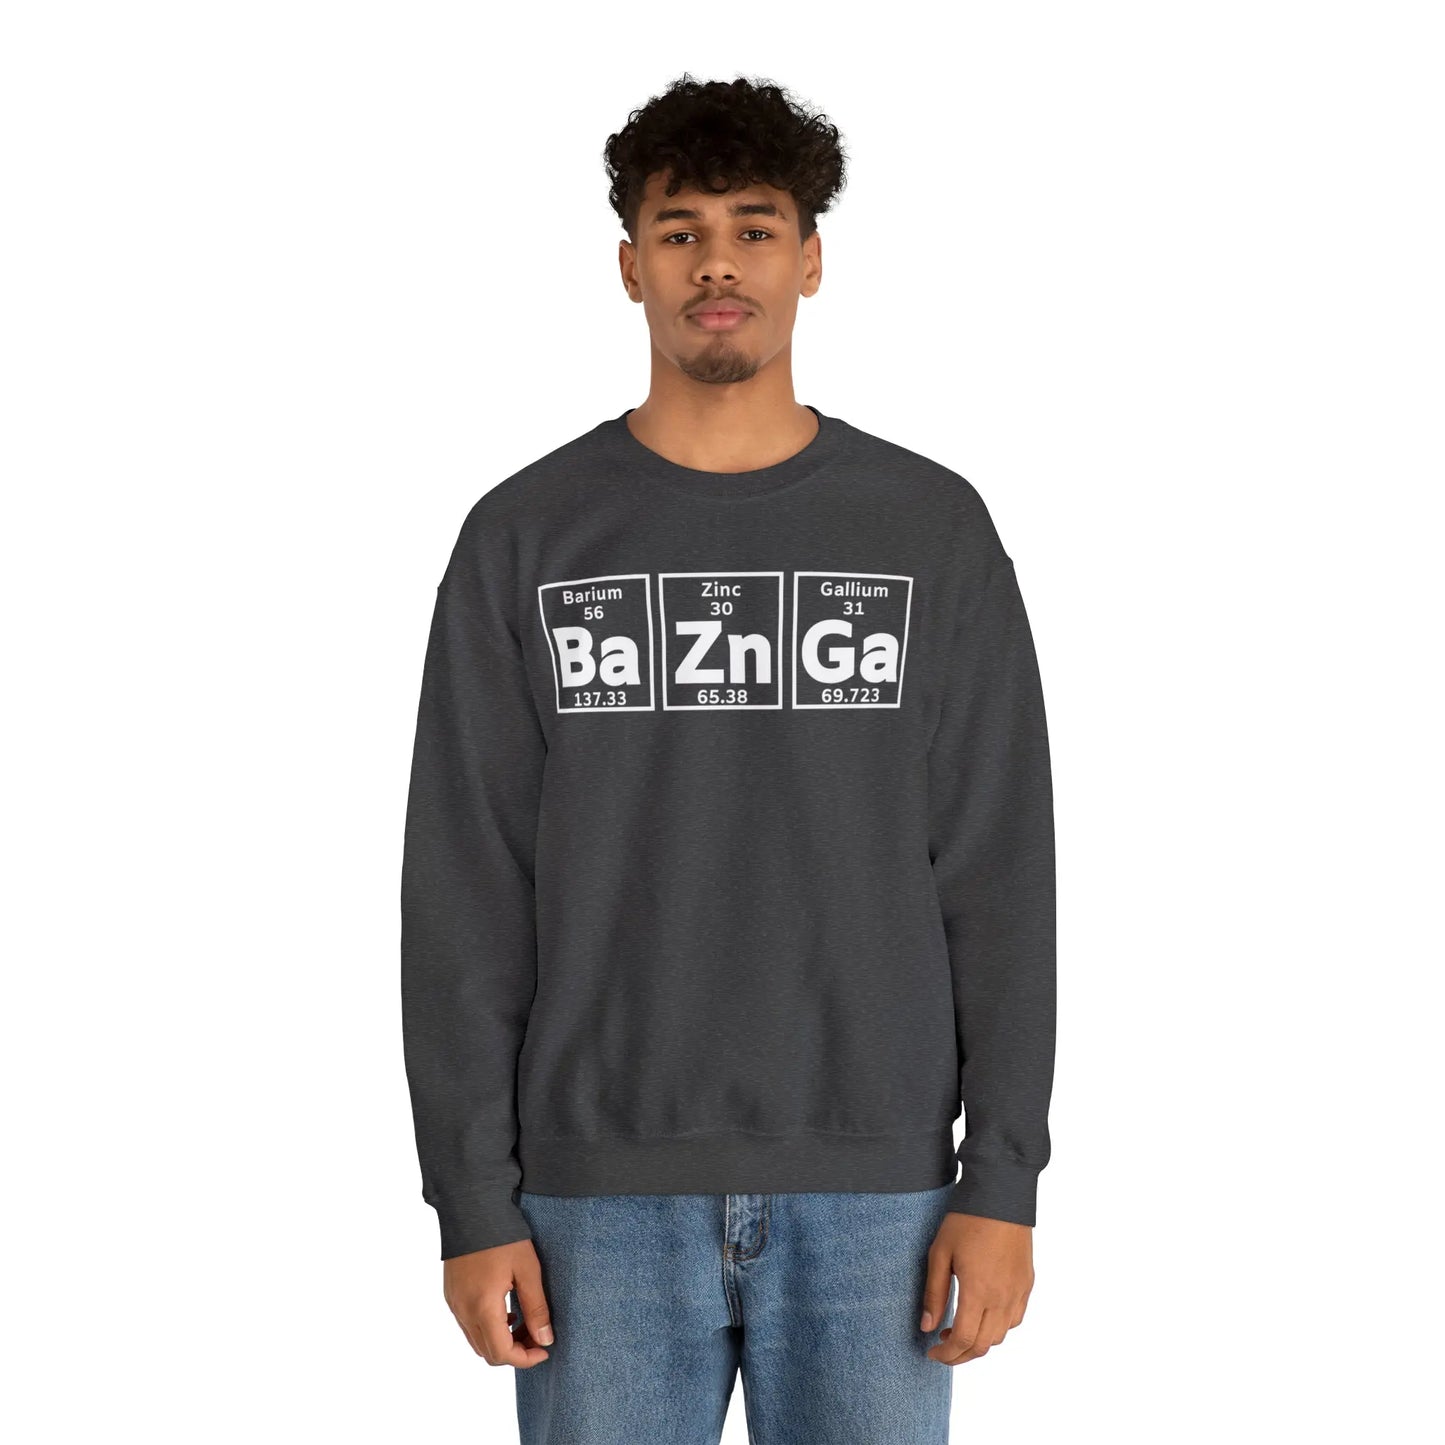 Geek Chic Big Bang Theory Sweatshirt - 'Ba Zn Ga' Periodic Table Printify